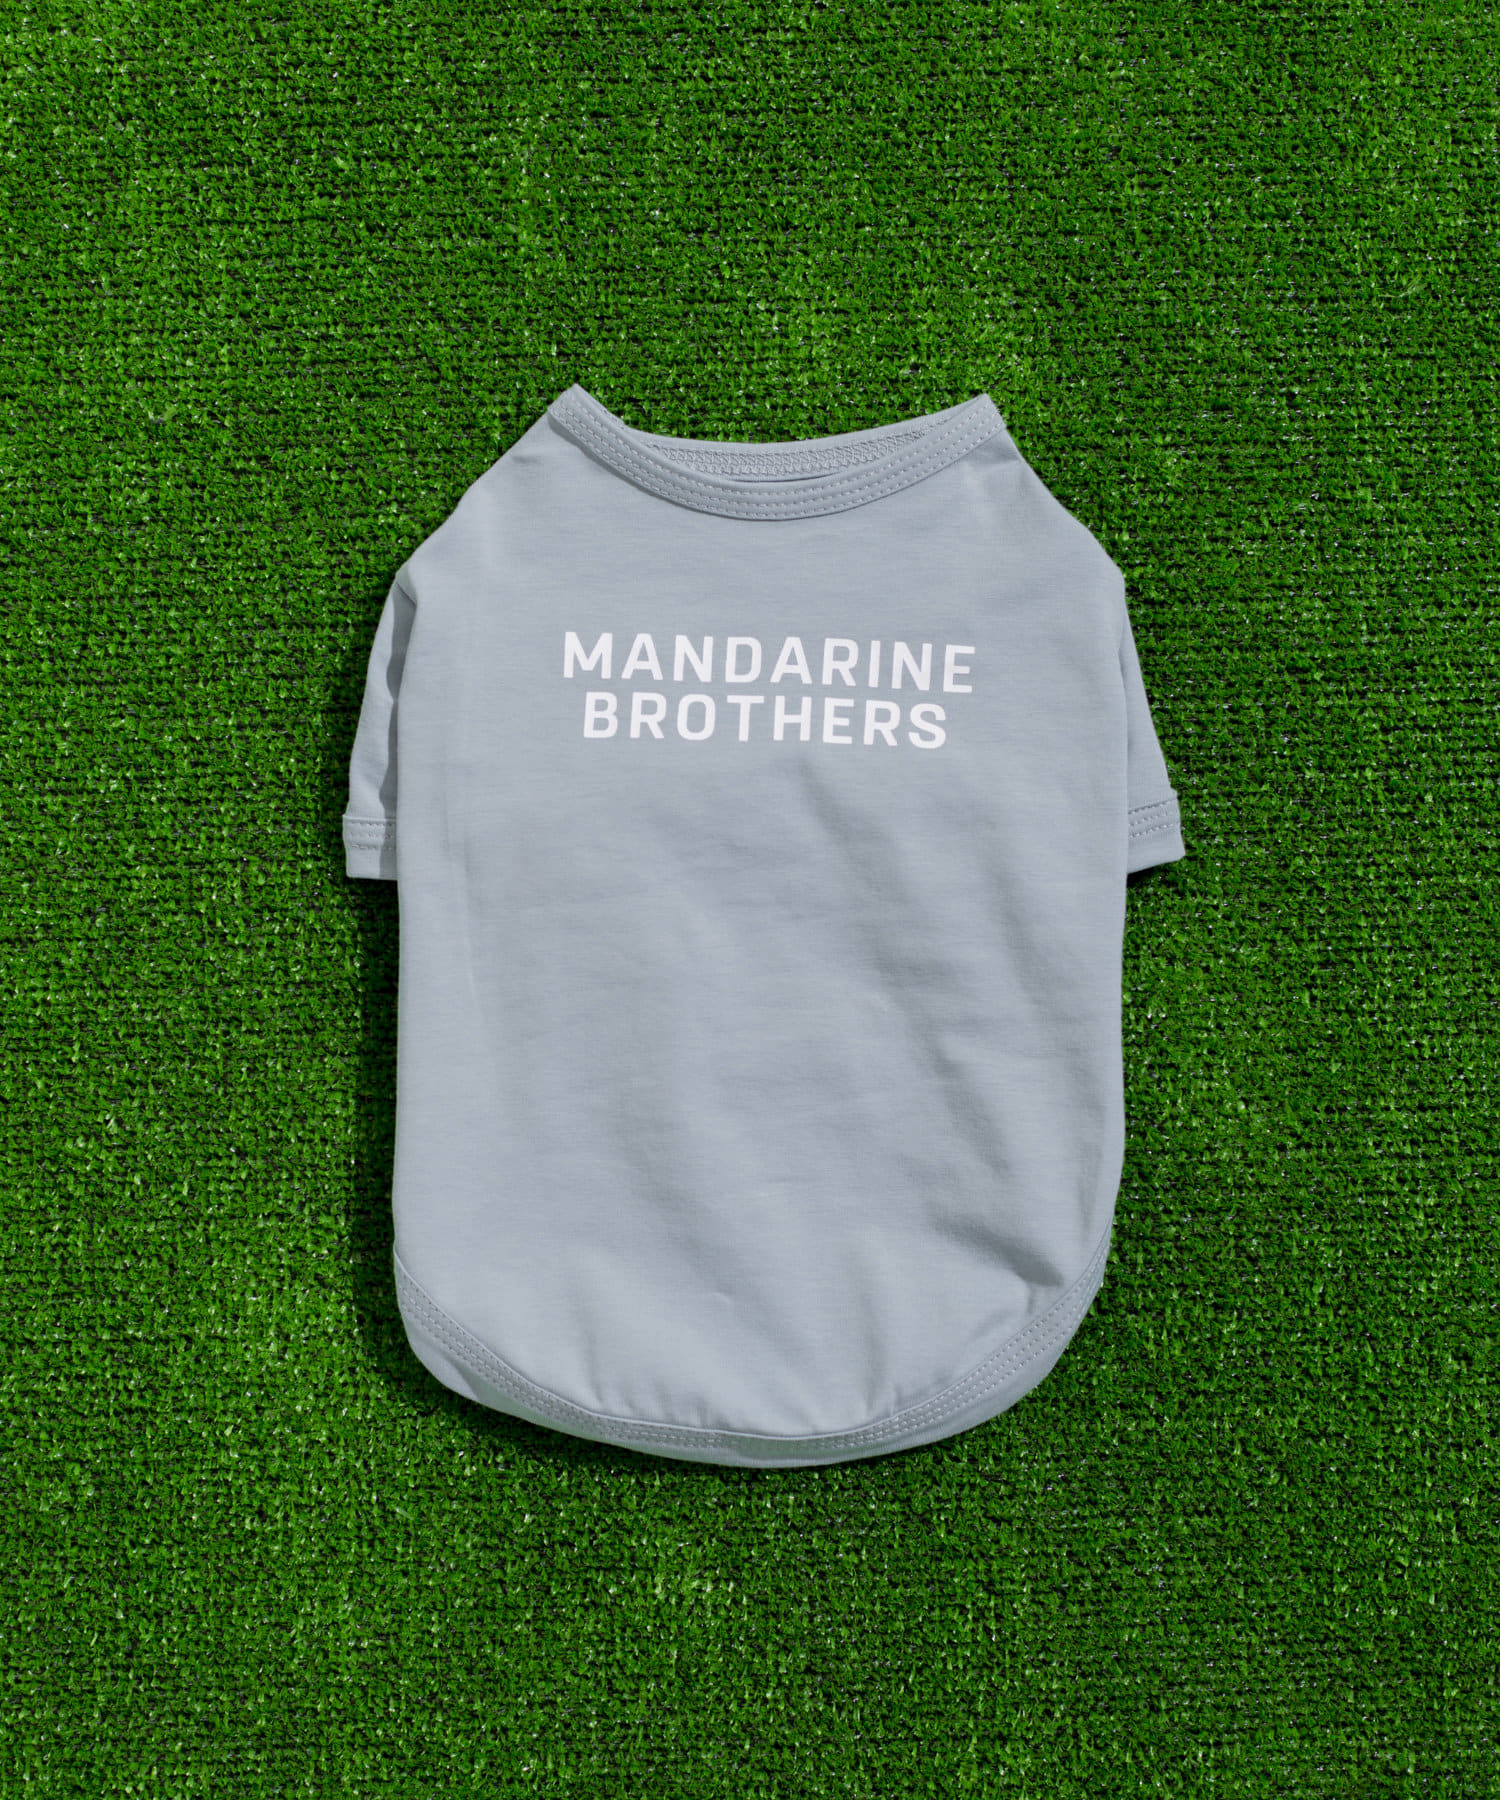 prose verse(プロズヴェール) 【MANDARINE BROTHERS】(XL/XXL)ベーシッククールTシャツ